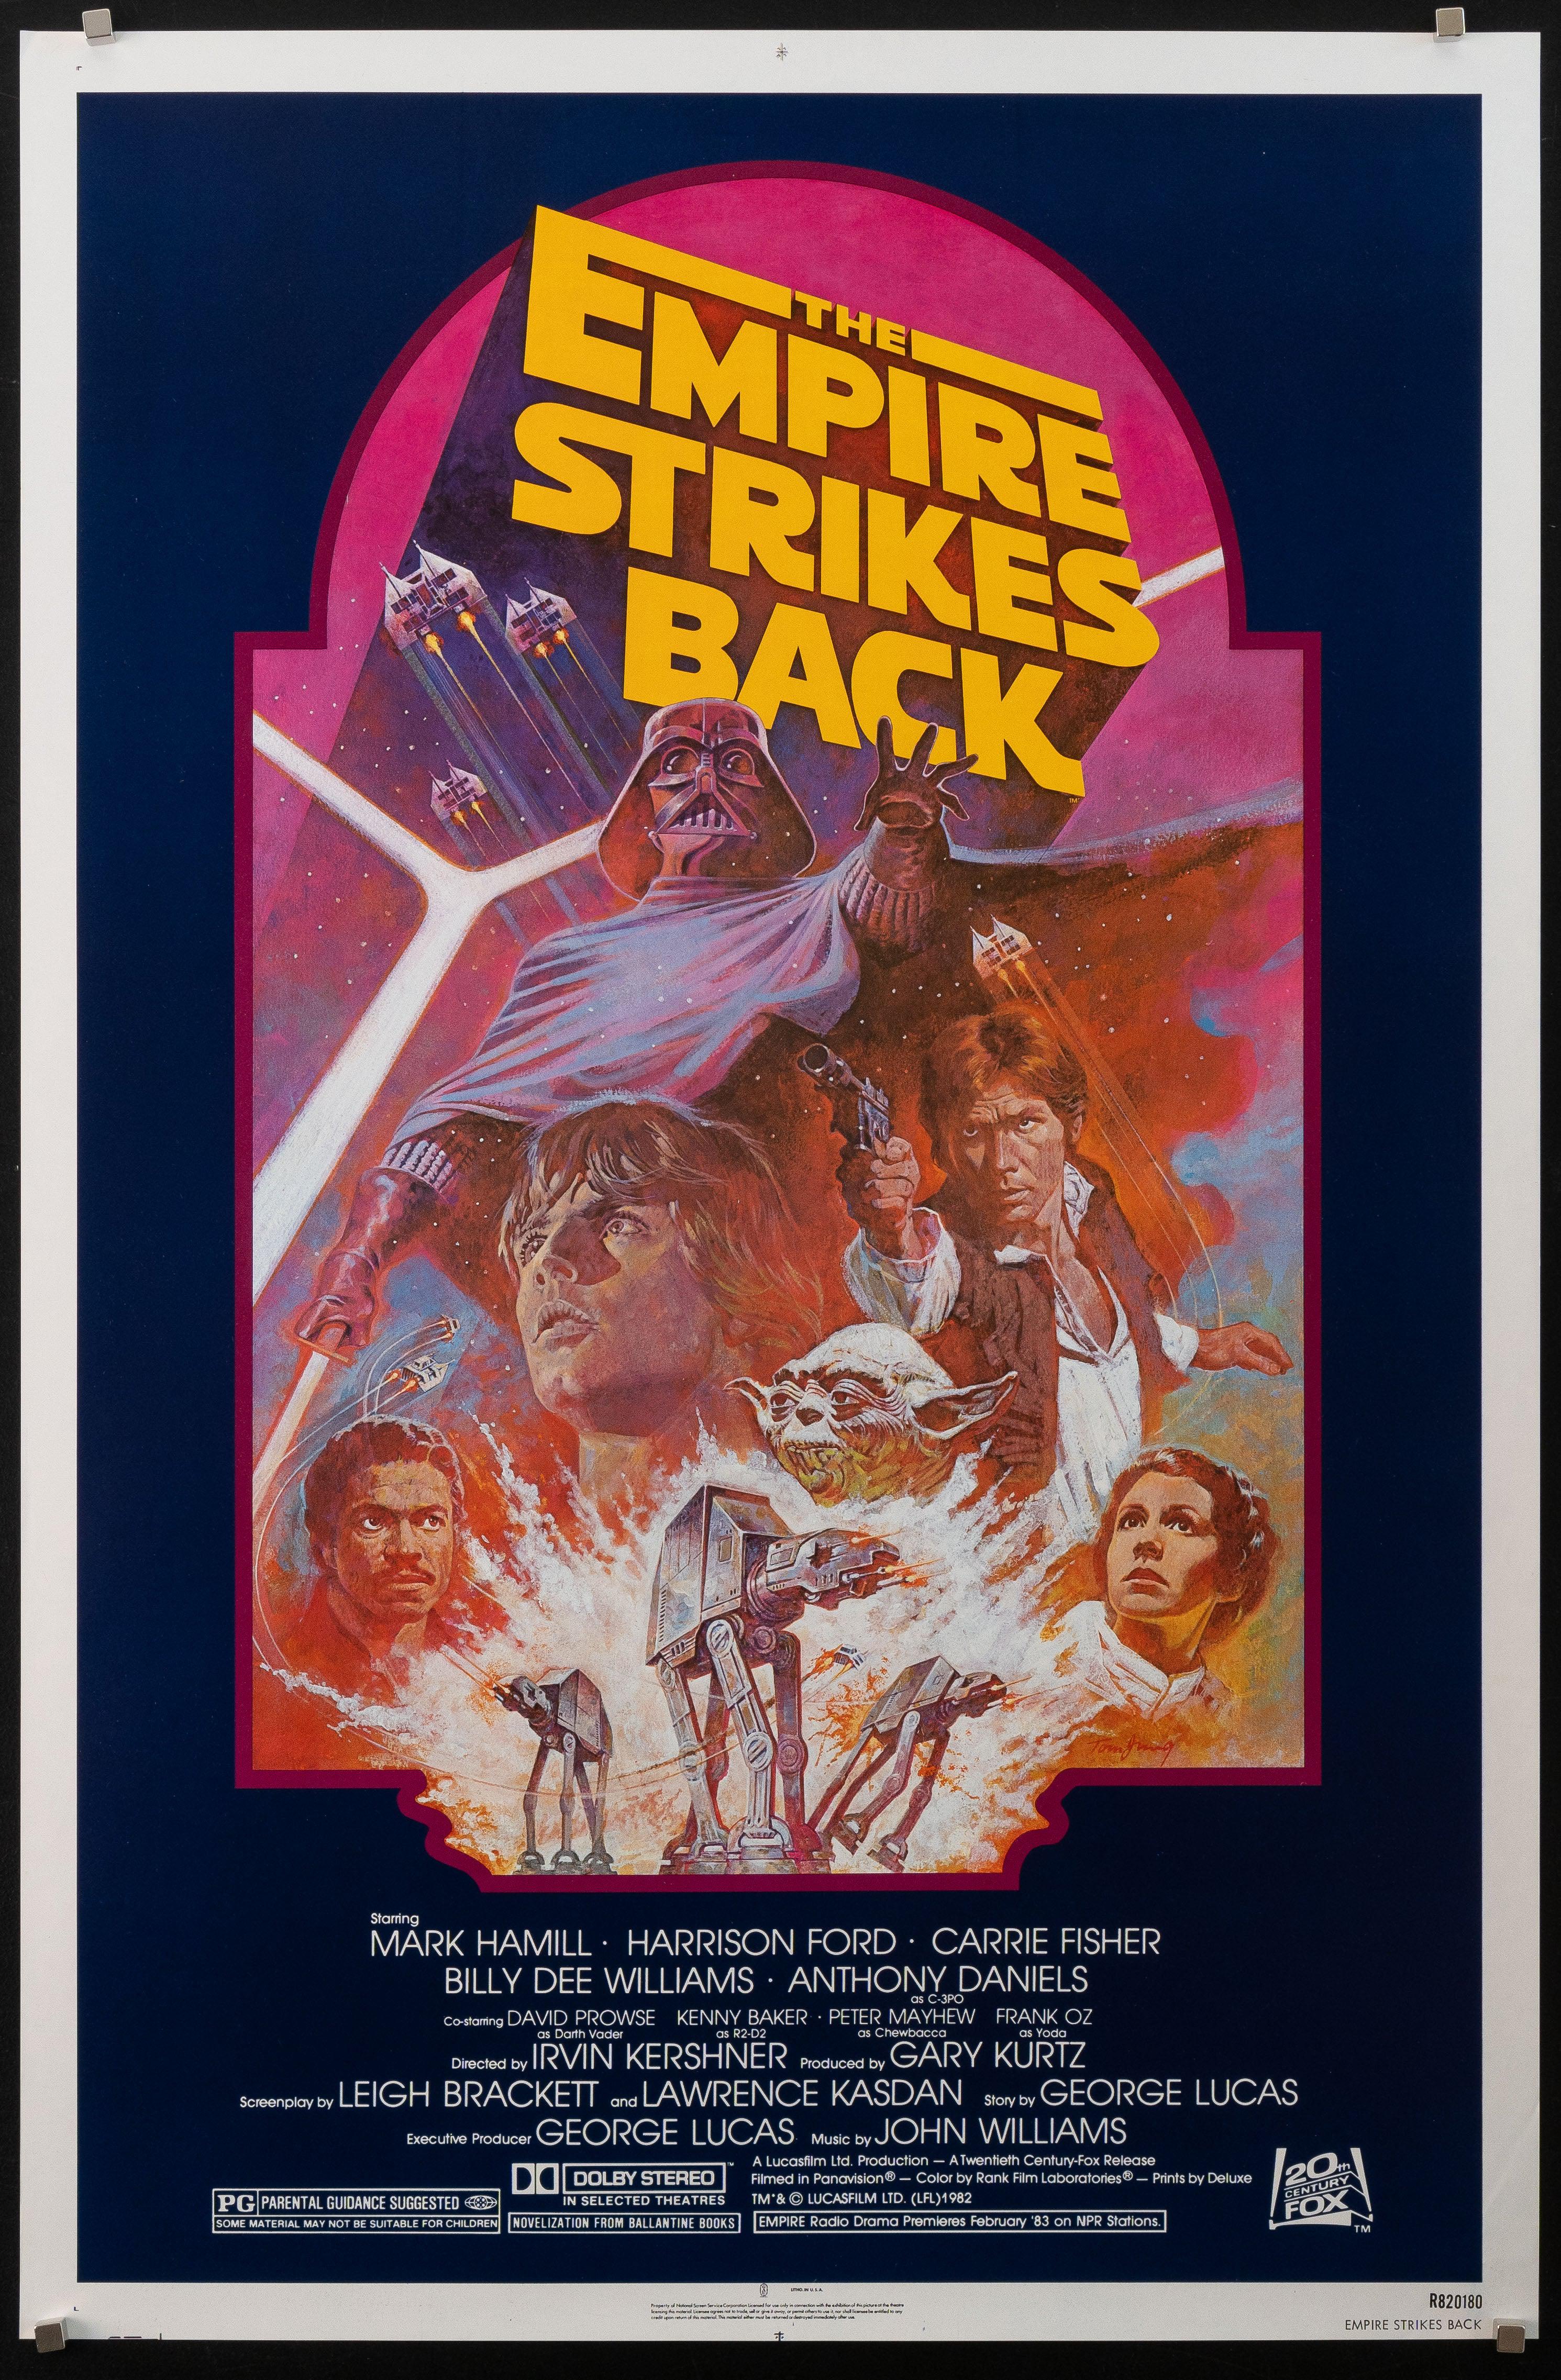 The Empire 1 Strikes Back (27x41) RI Sheet Poster 1982 Movie